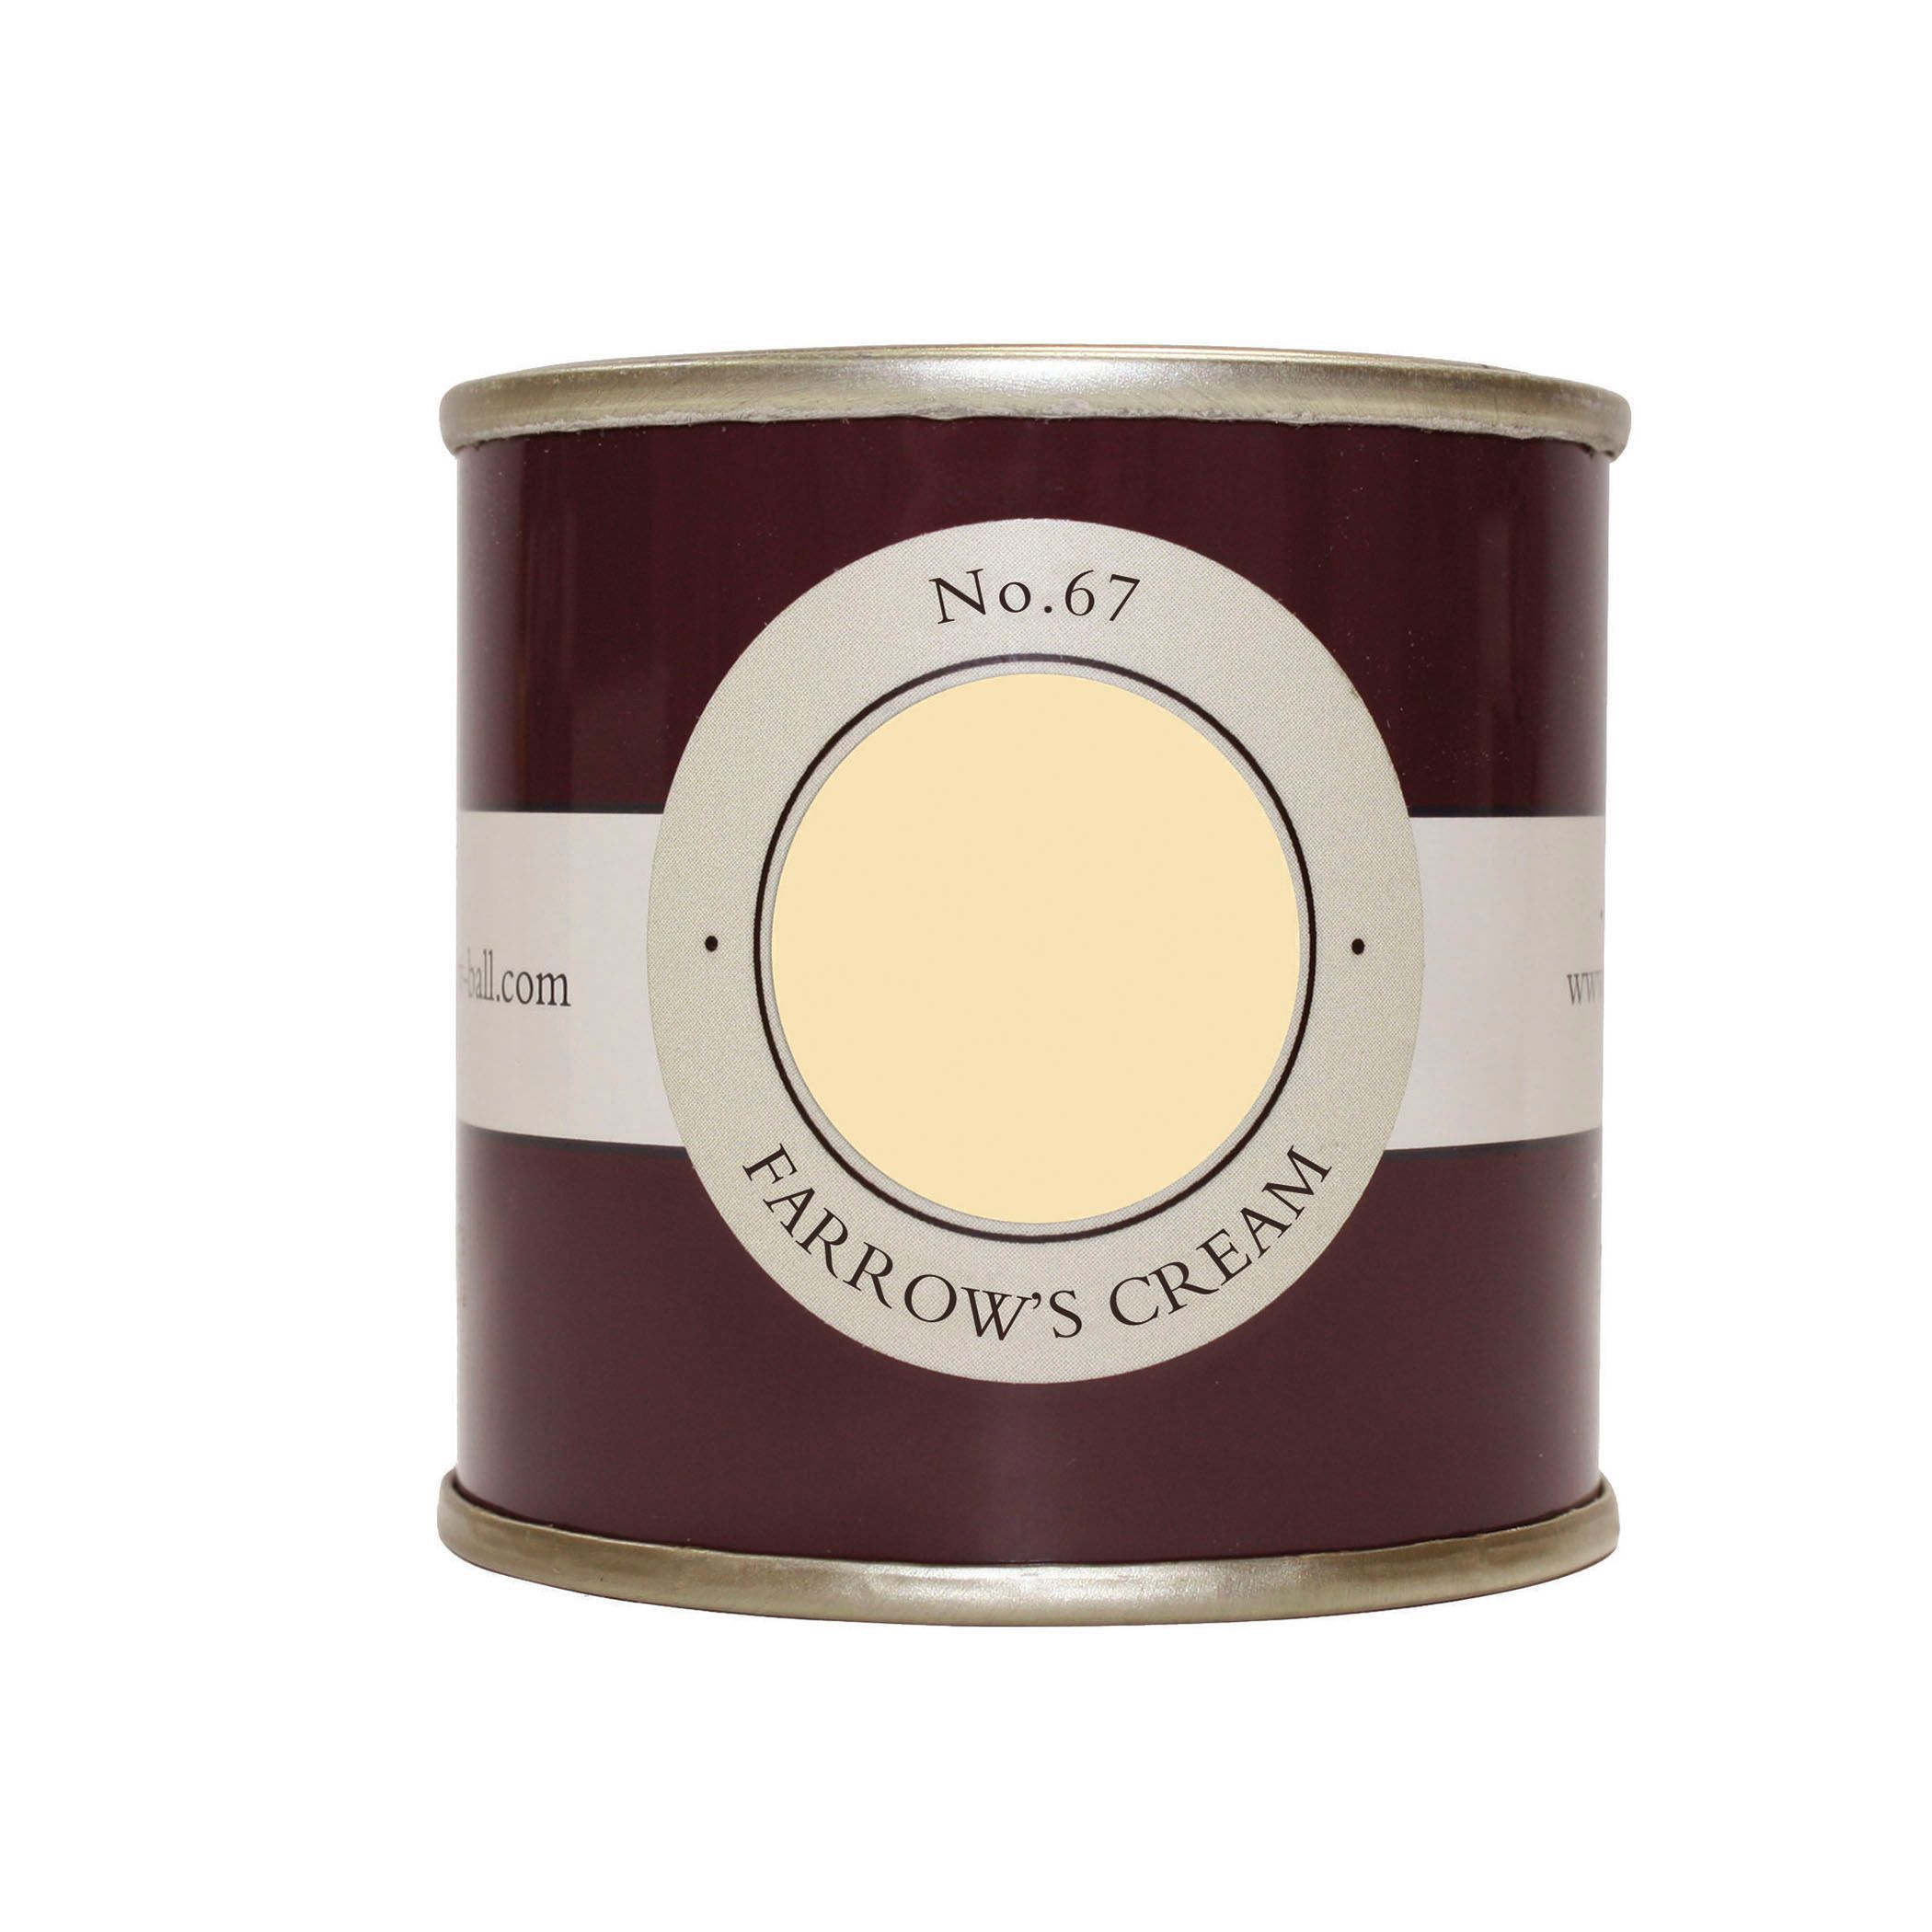 Farrow & Ball Estate Farrow's cream No.67 Emulsion paint, 100ml Tester pot